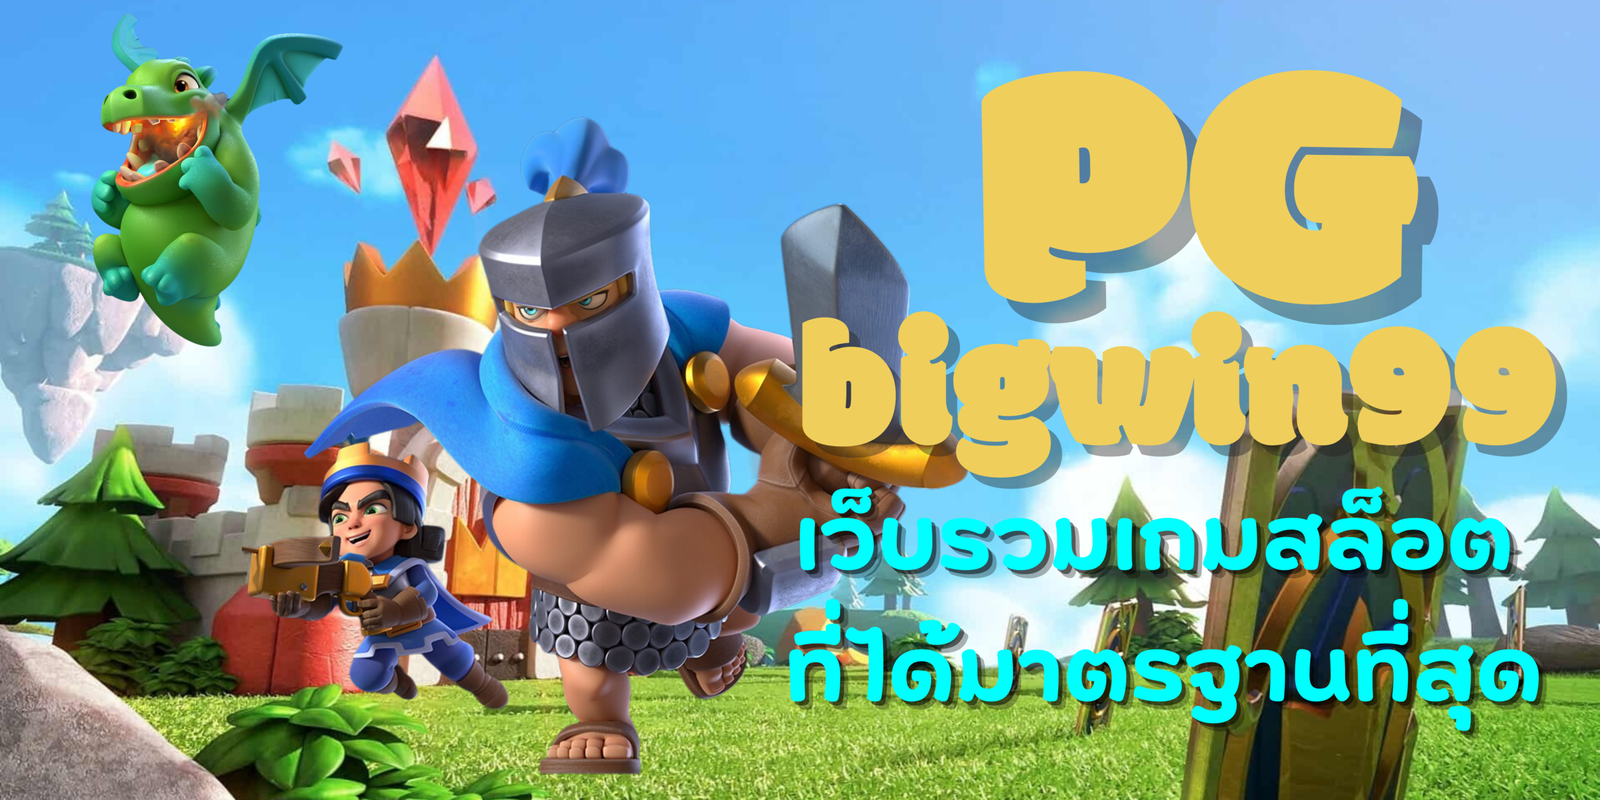 PG-bigwin99-สมัครสมาชิก